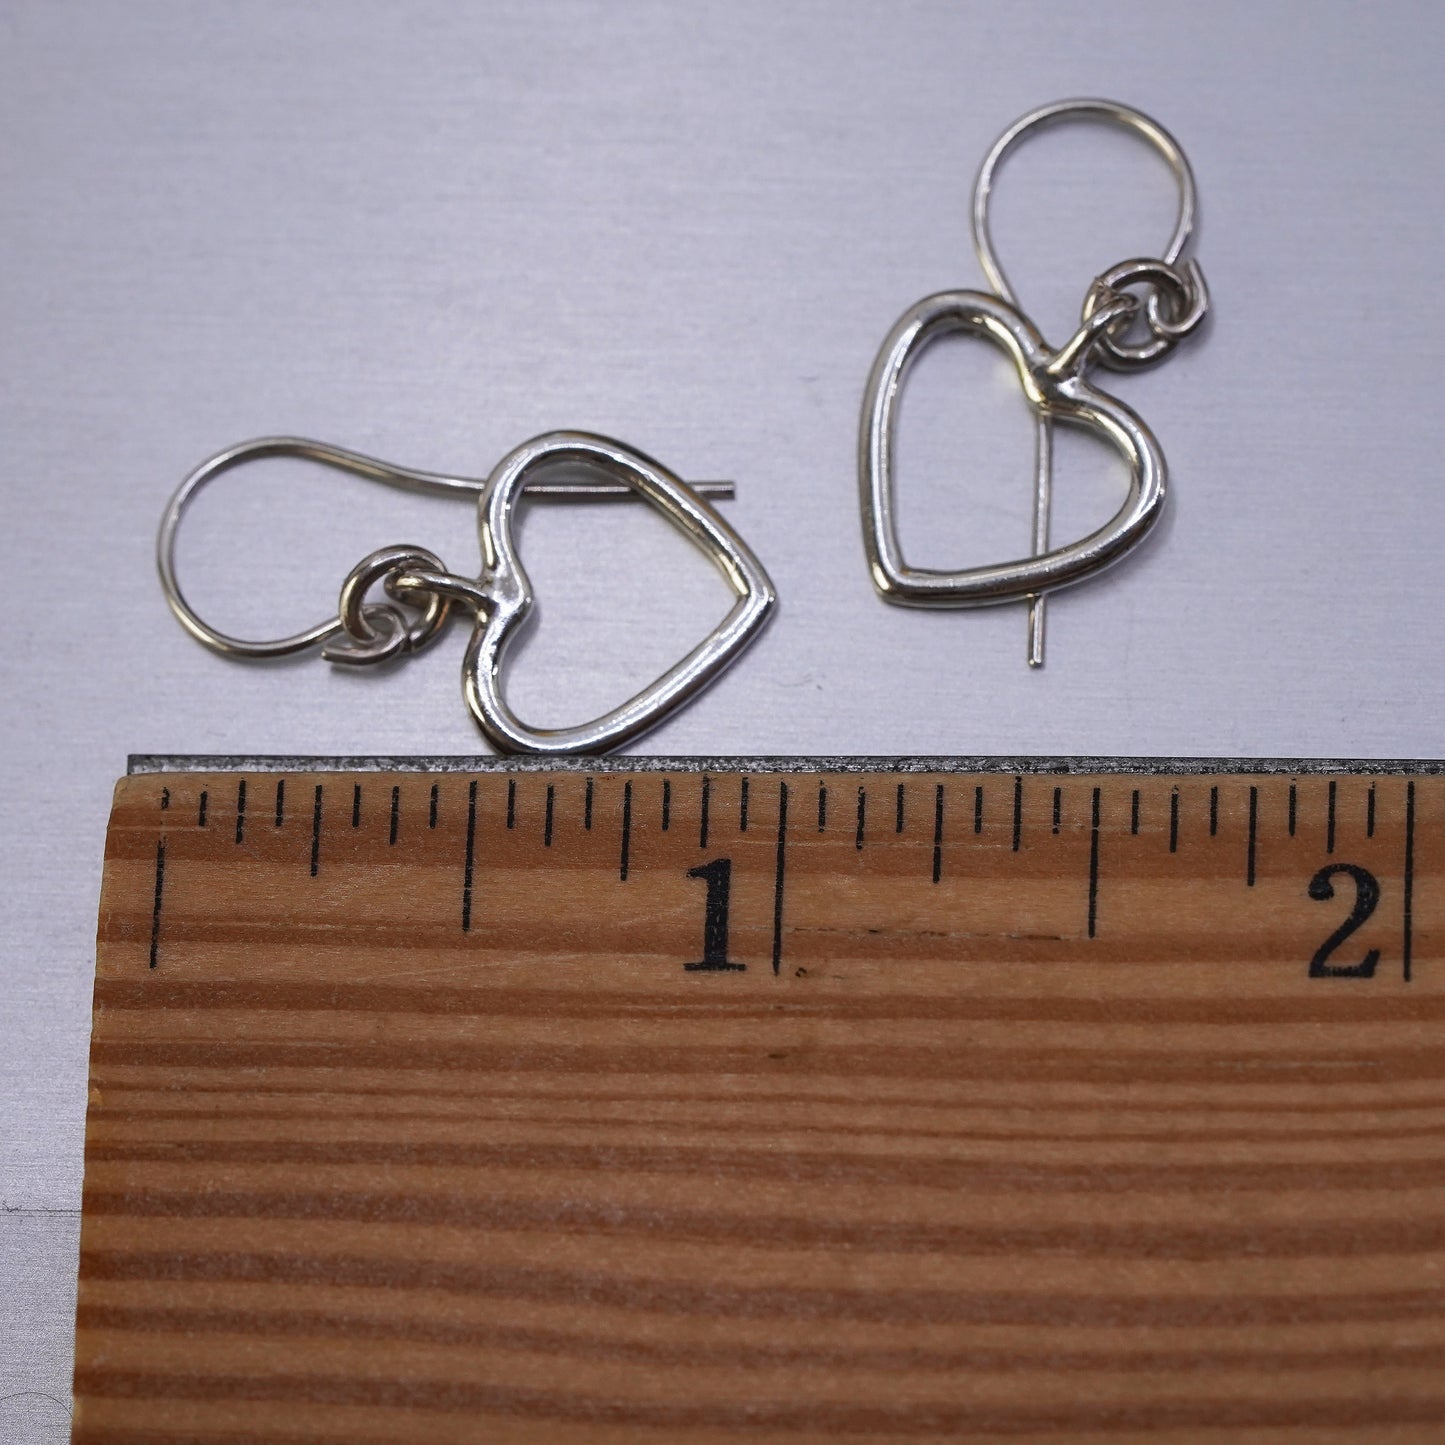 vintage handmade sterling silver earrings, 925 heart shaped dangles